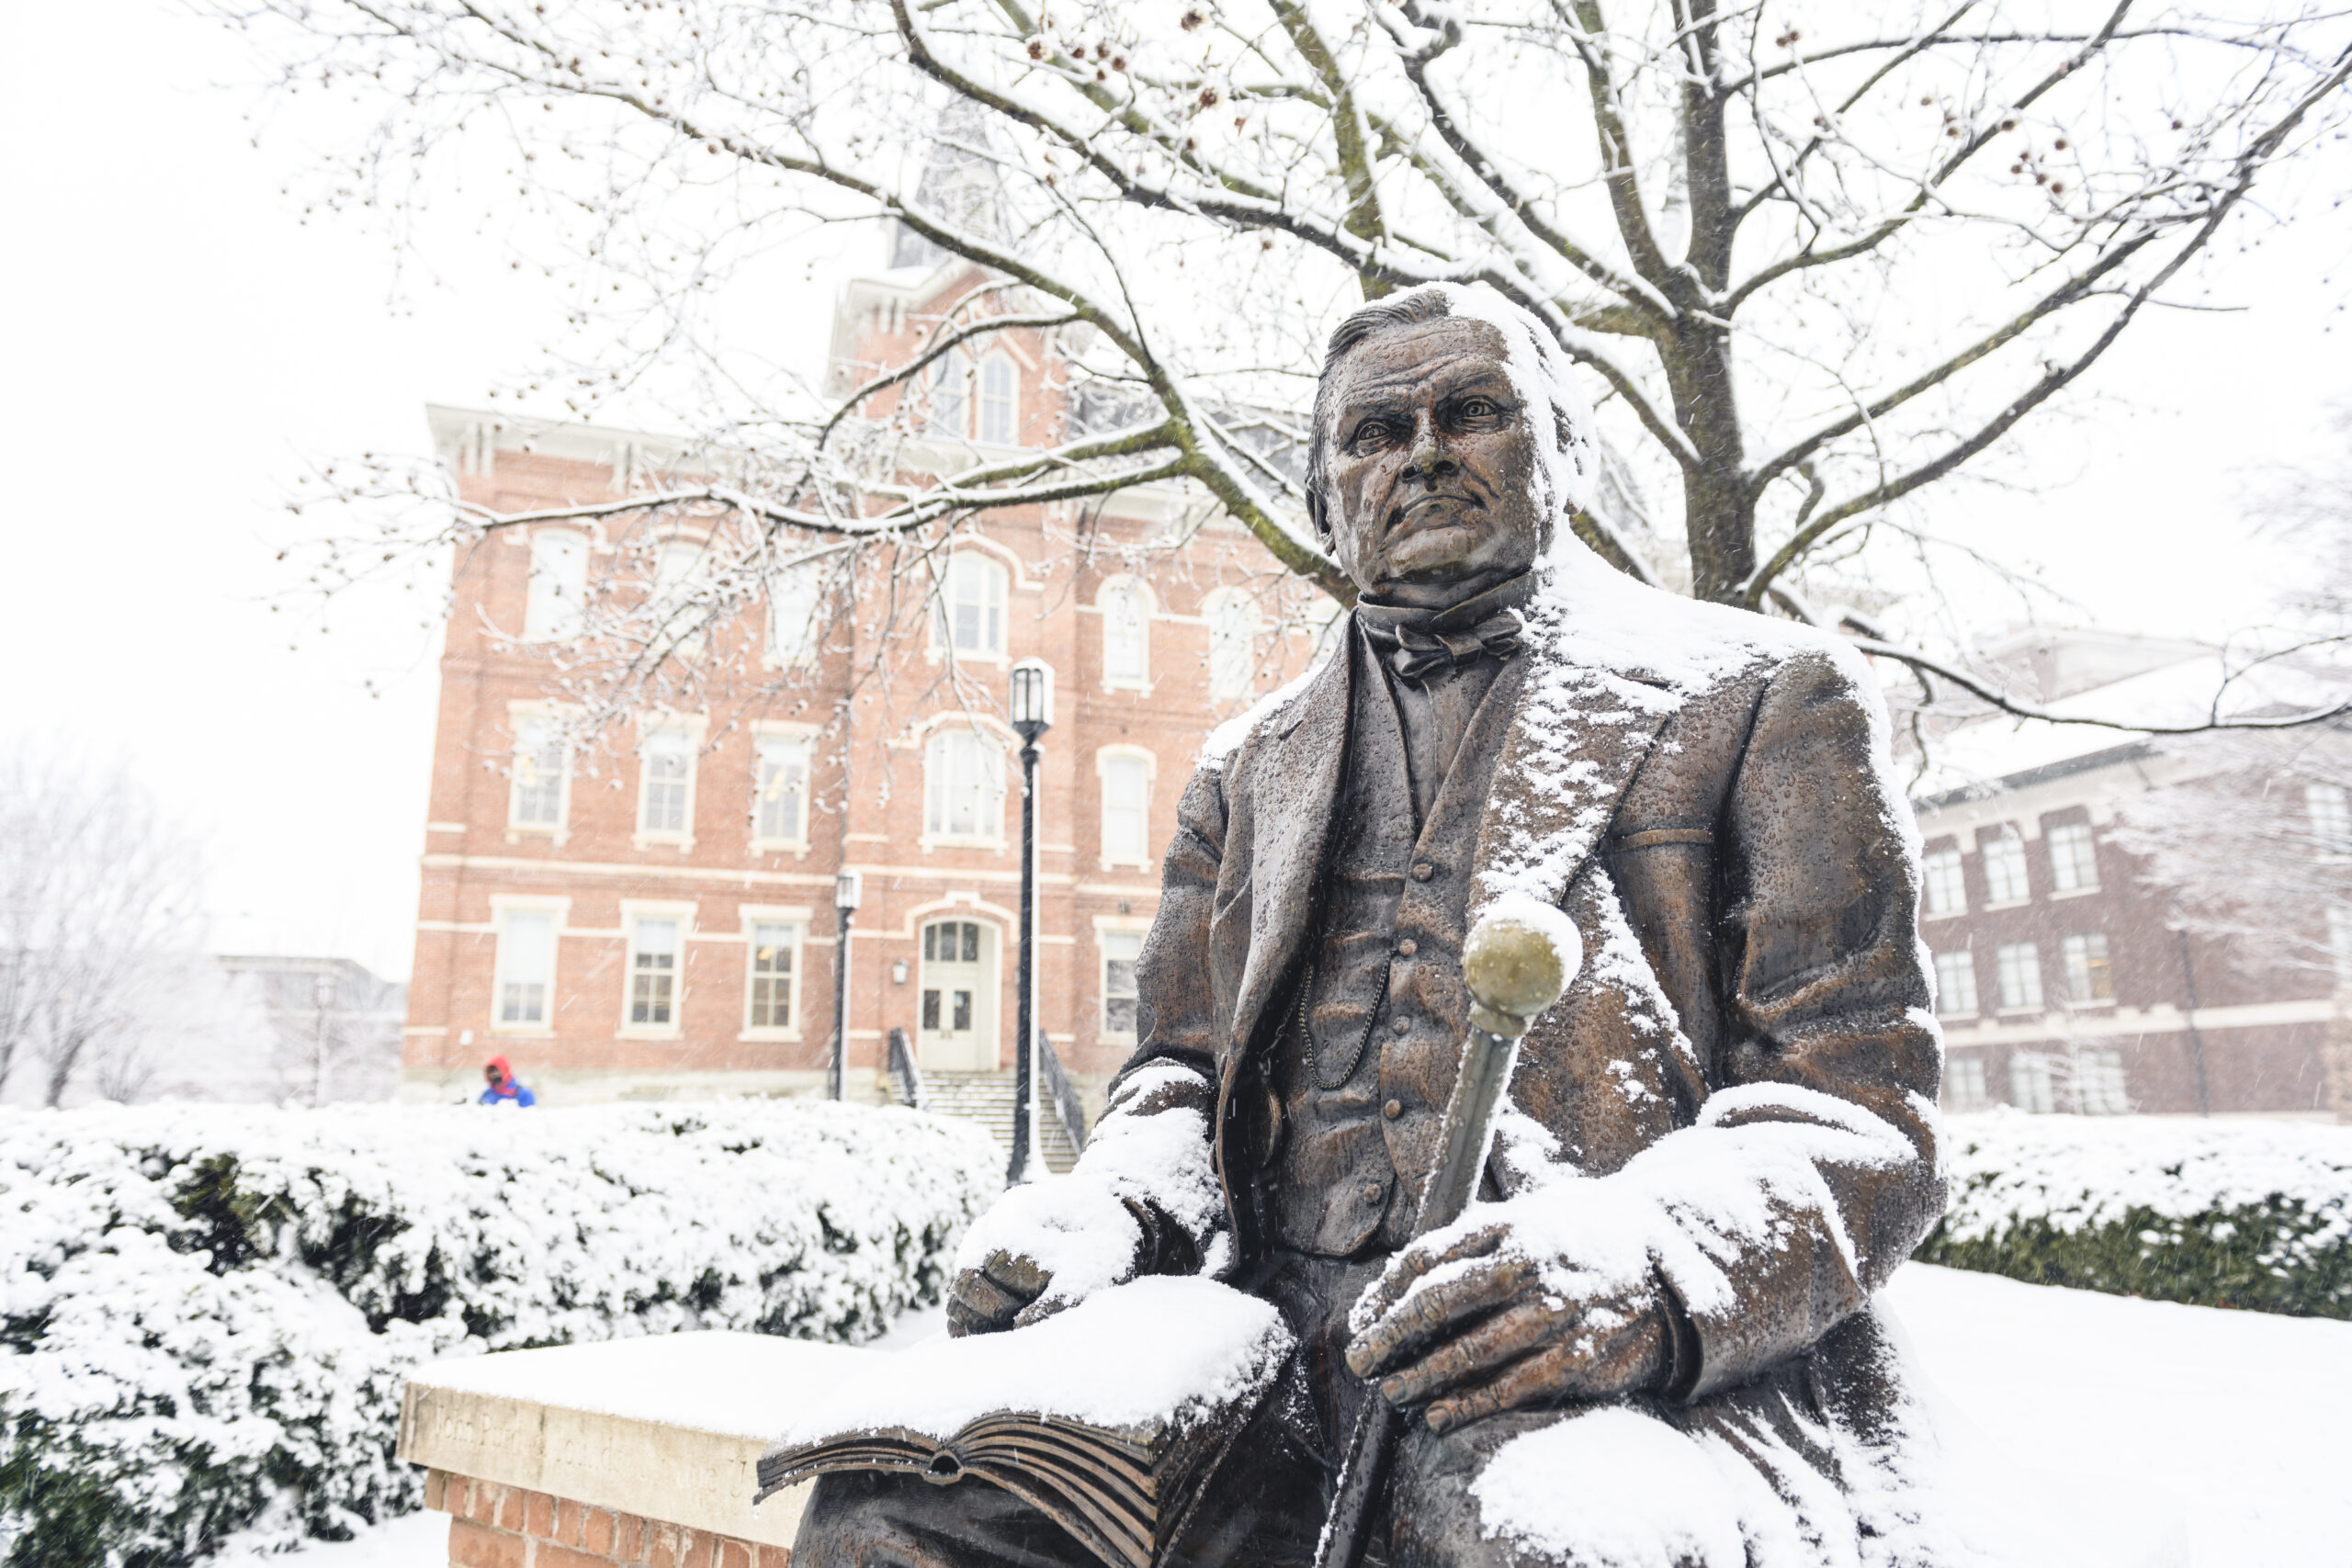 John Purdue statue in winter